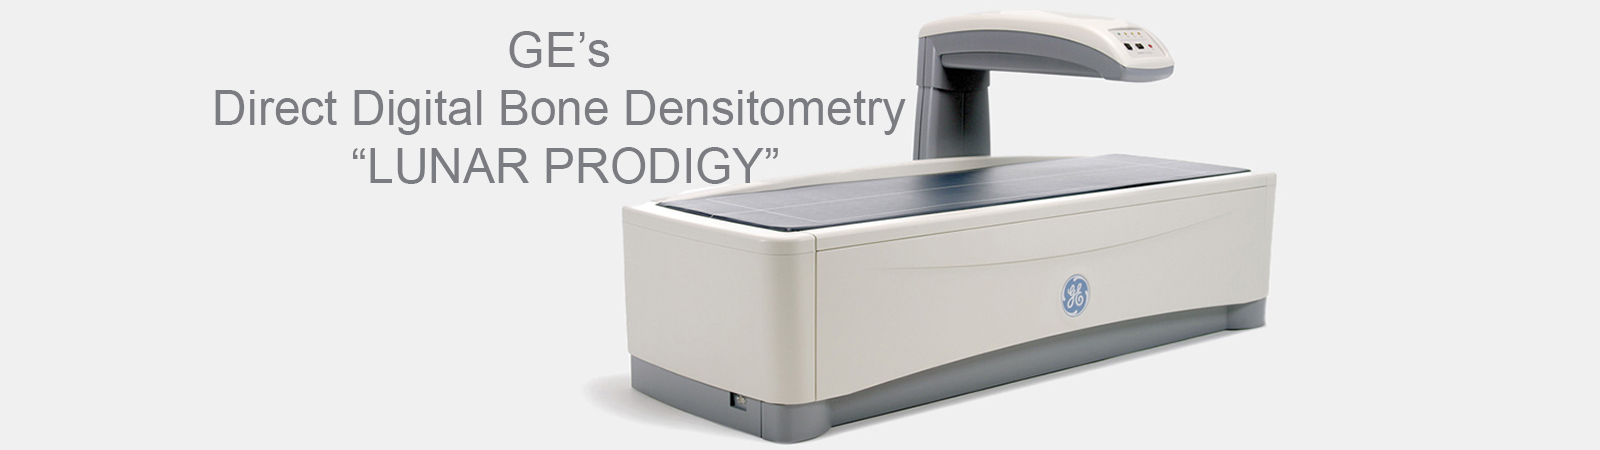 Refurbished GE’s Diret Digital Bone Densitometry “LUNAR PRODIGY”